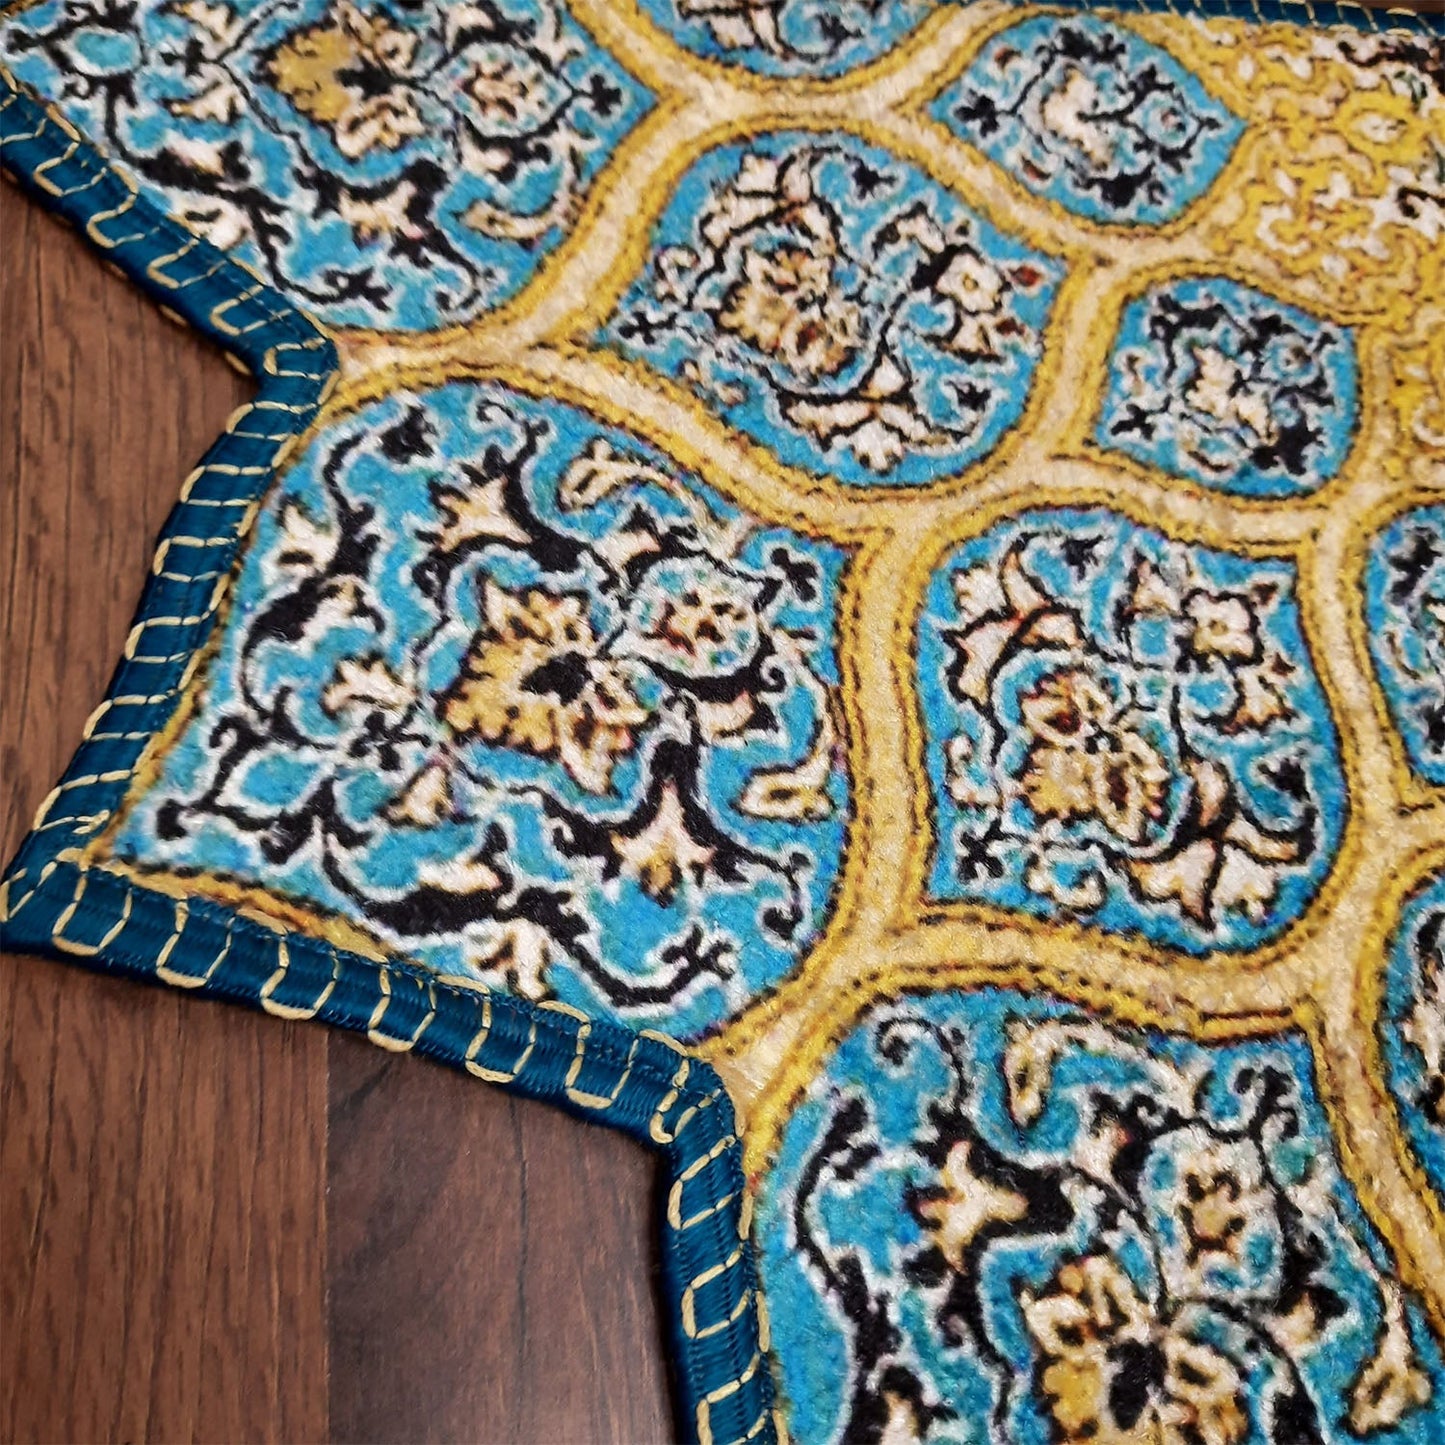 Avioni Home Floor Mats in Beautiful Traditional Persian Cutout Design | Anti Slip, Durable & Washable | Outdoor & Indoor